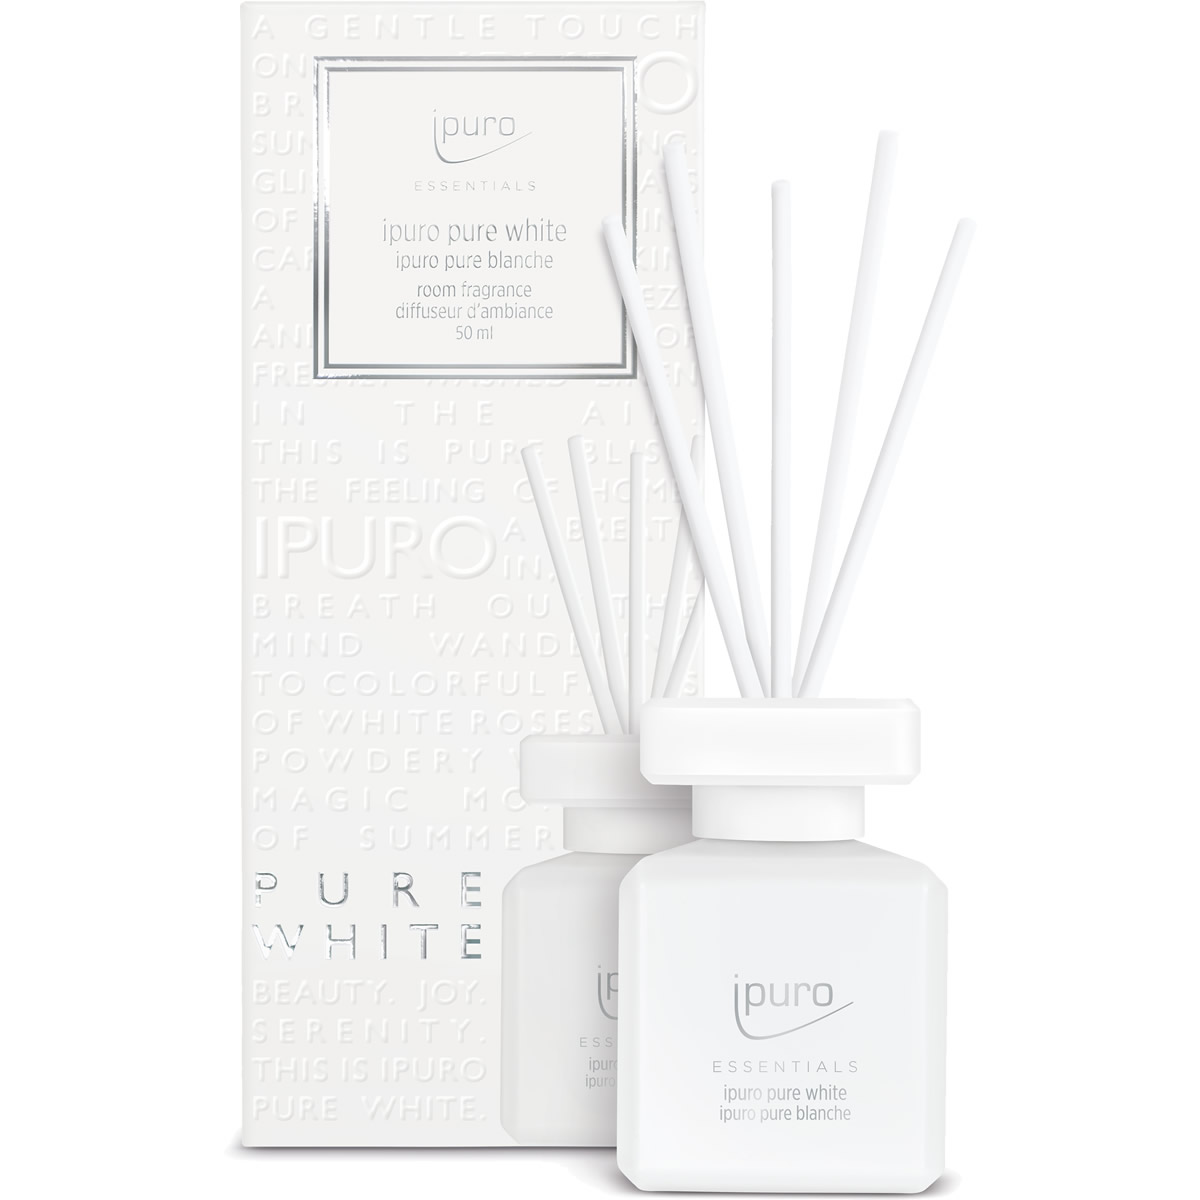 ipuro Fragrance pure white, 50ml - Buy online now